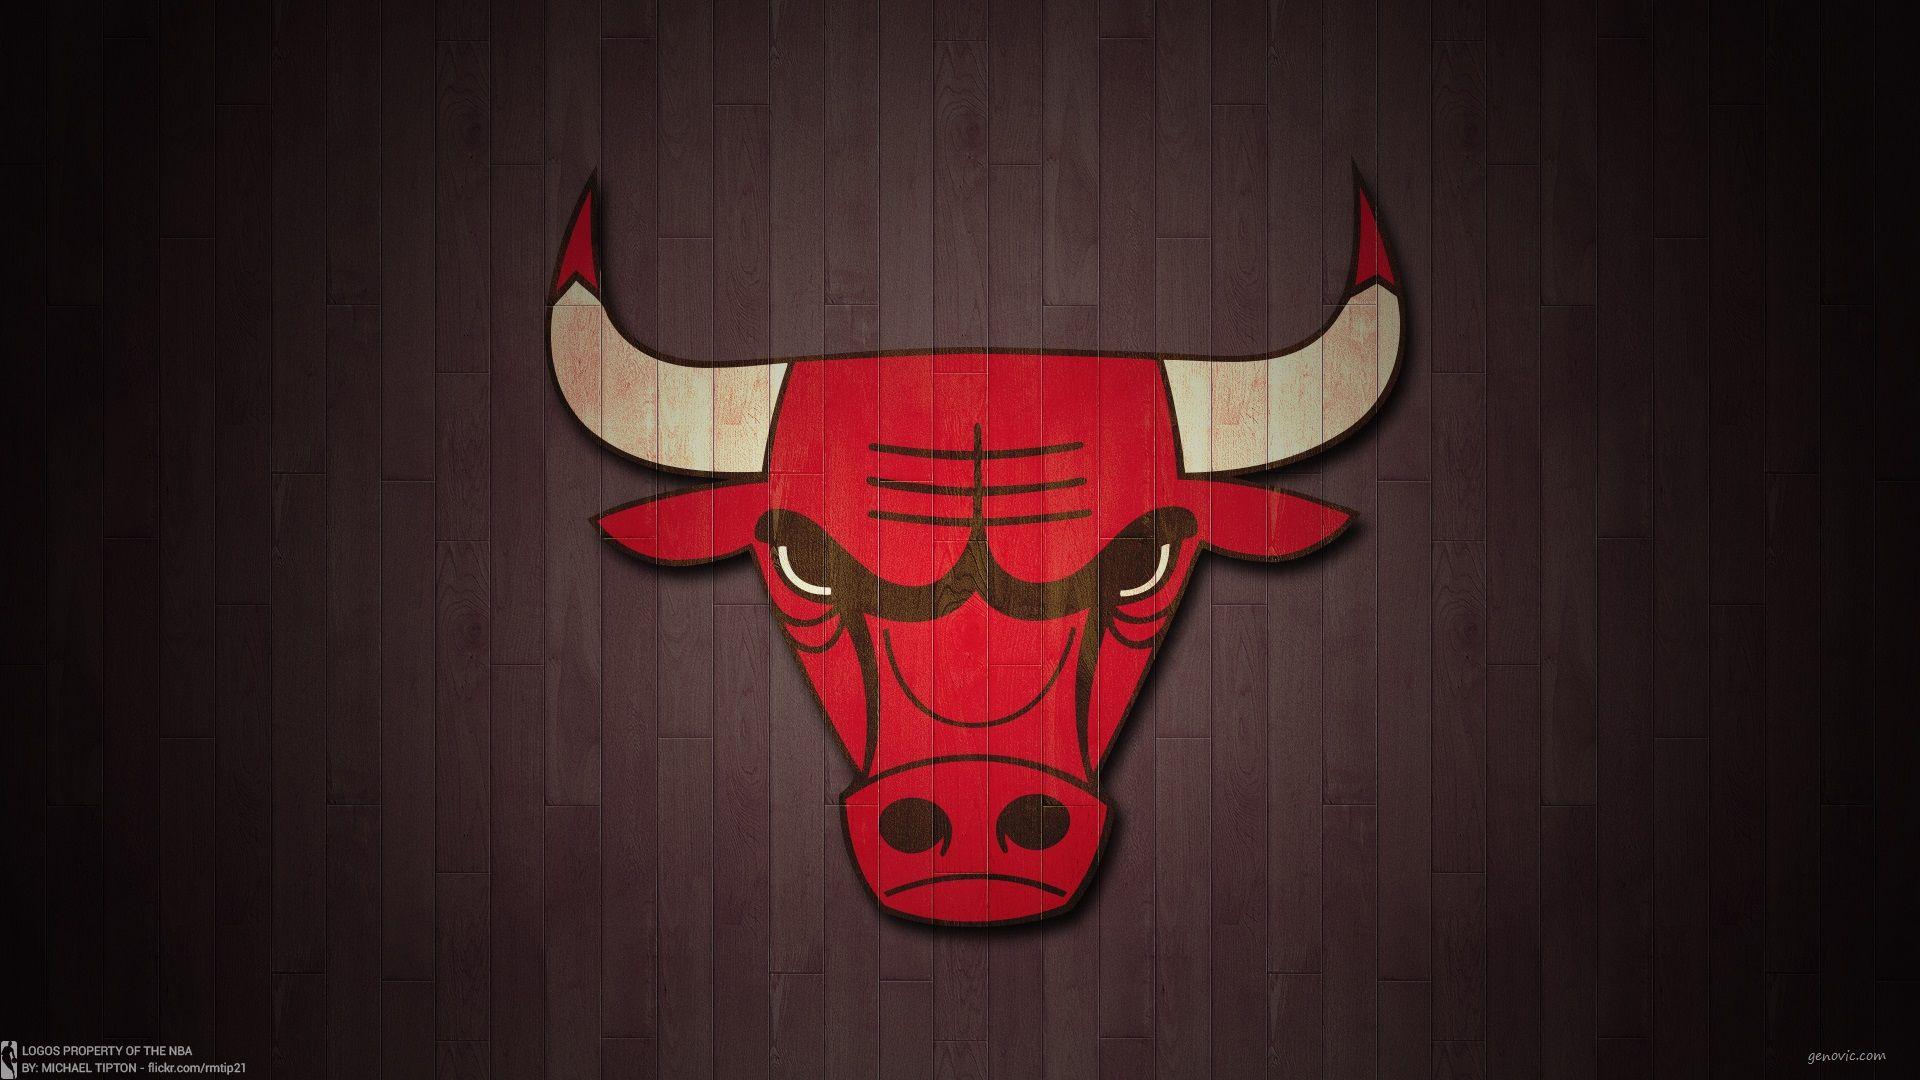 Chicago Bulls Wallpaper HD